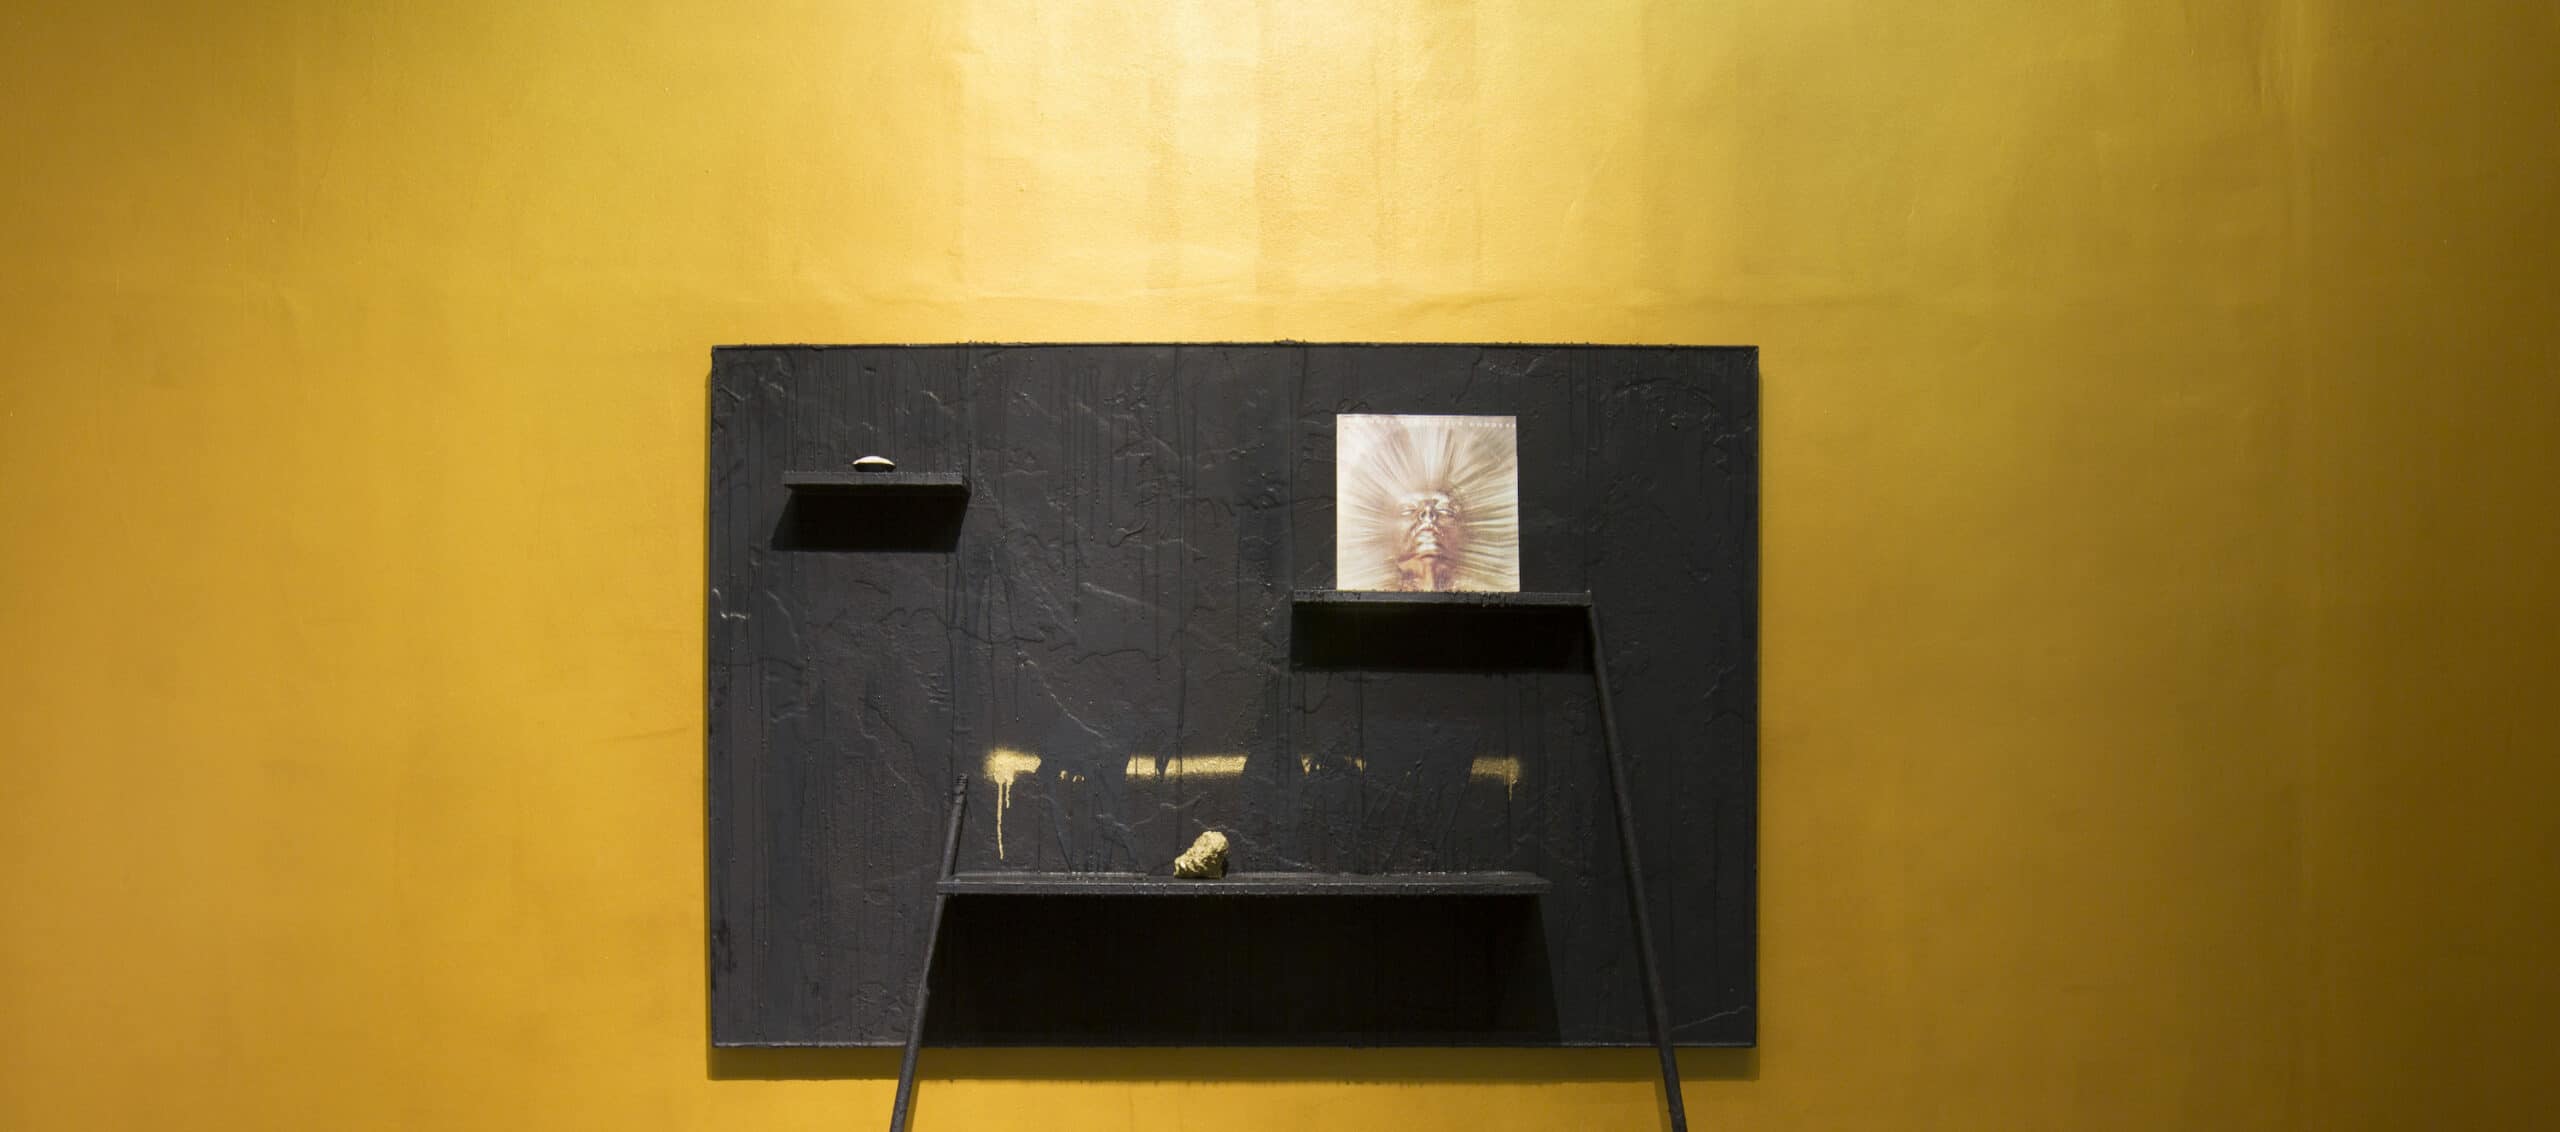 Rashid Johnson. The Sunshine. 2011. Wax, black soap, vinyl, space rock, wood, and shea butter. 121.92 x 182.88 x 24.77 cm. Installation view.